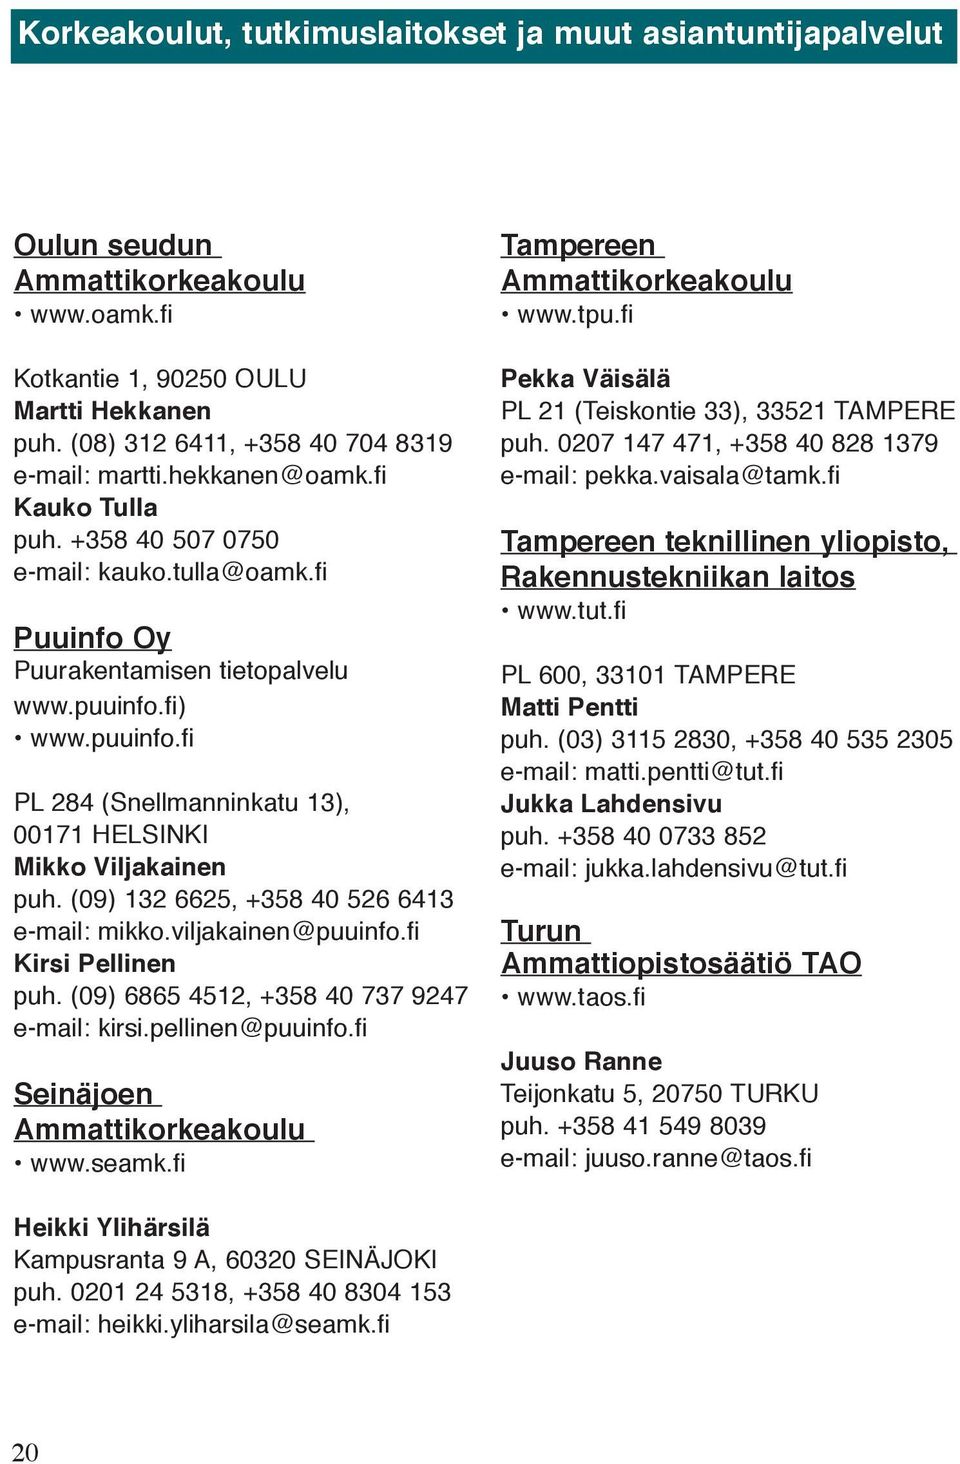 (09) 132 6625, +358 40 526 6413 e-mail: mikko.viljakainen@puuinfo.fi Kirsi Pellinen puh. (09) 6865 4512, +358 40 737 9247 e-mail: kirsi.pellinen@puuinfo.fi Seinäjoen Ammattikorkeakoulu www.seamk.